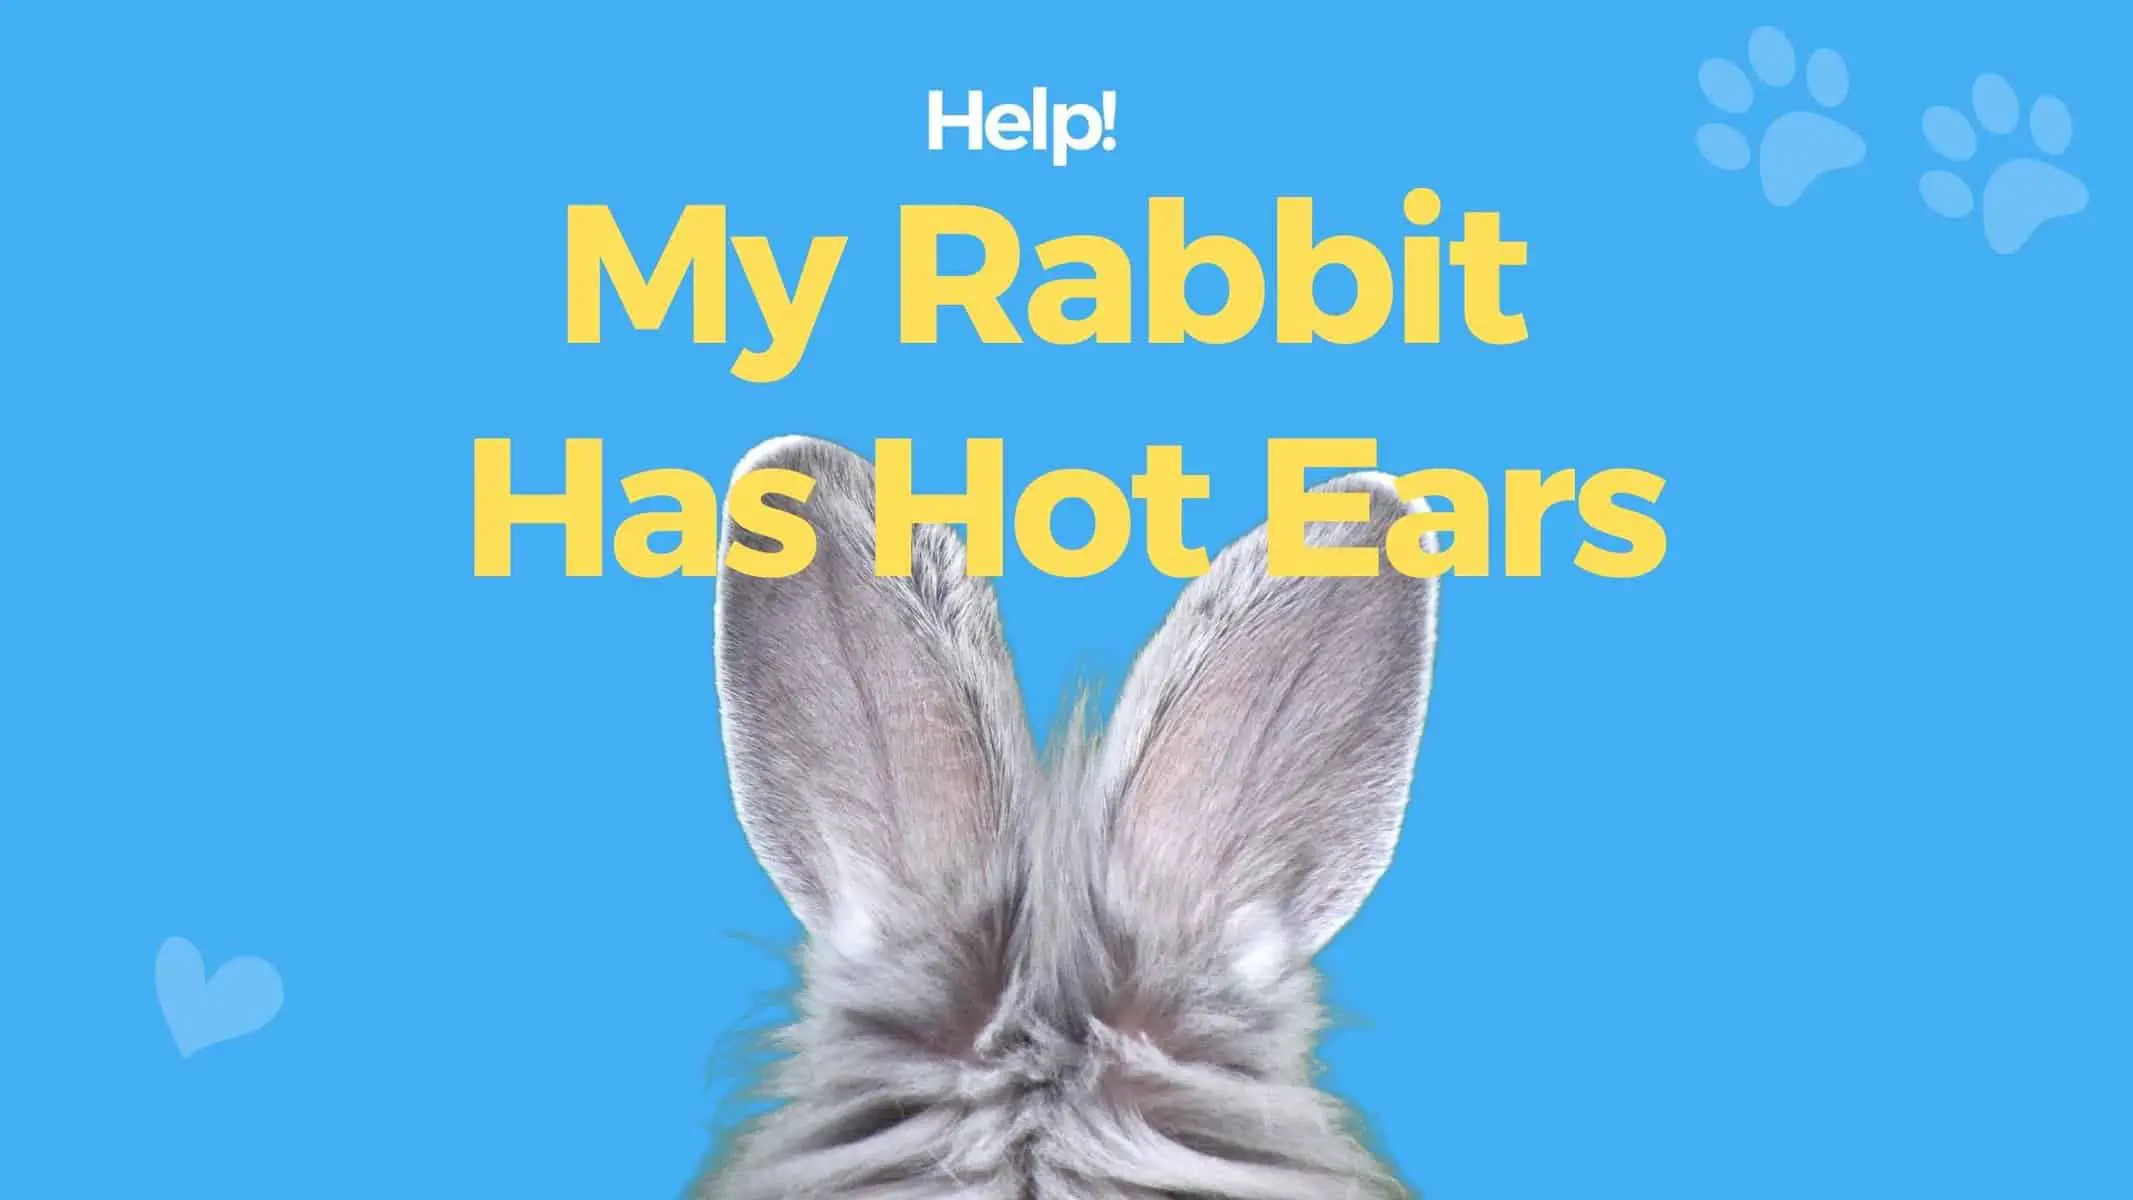 Rabbit has hot ears